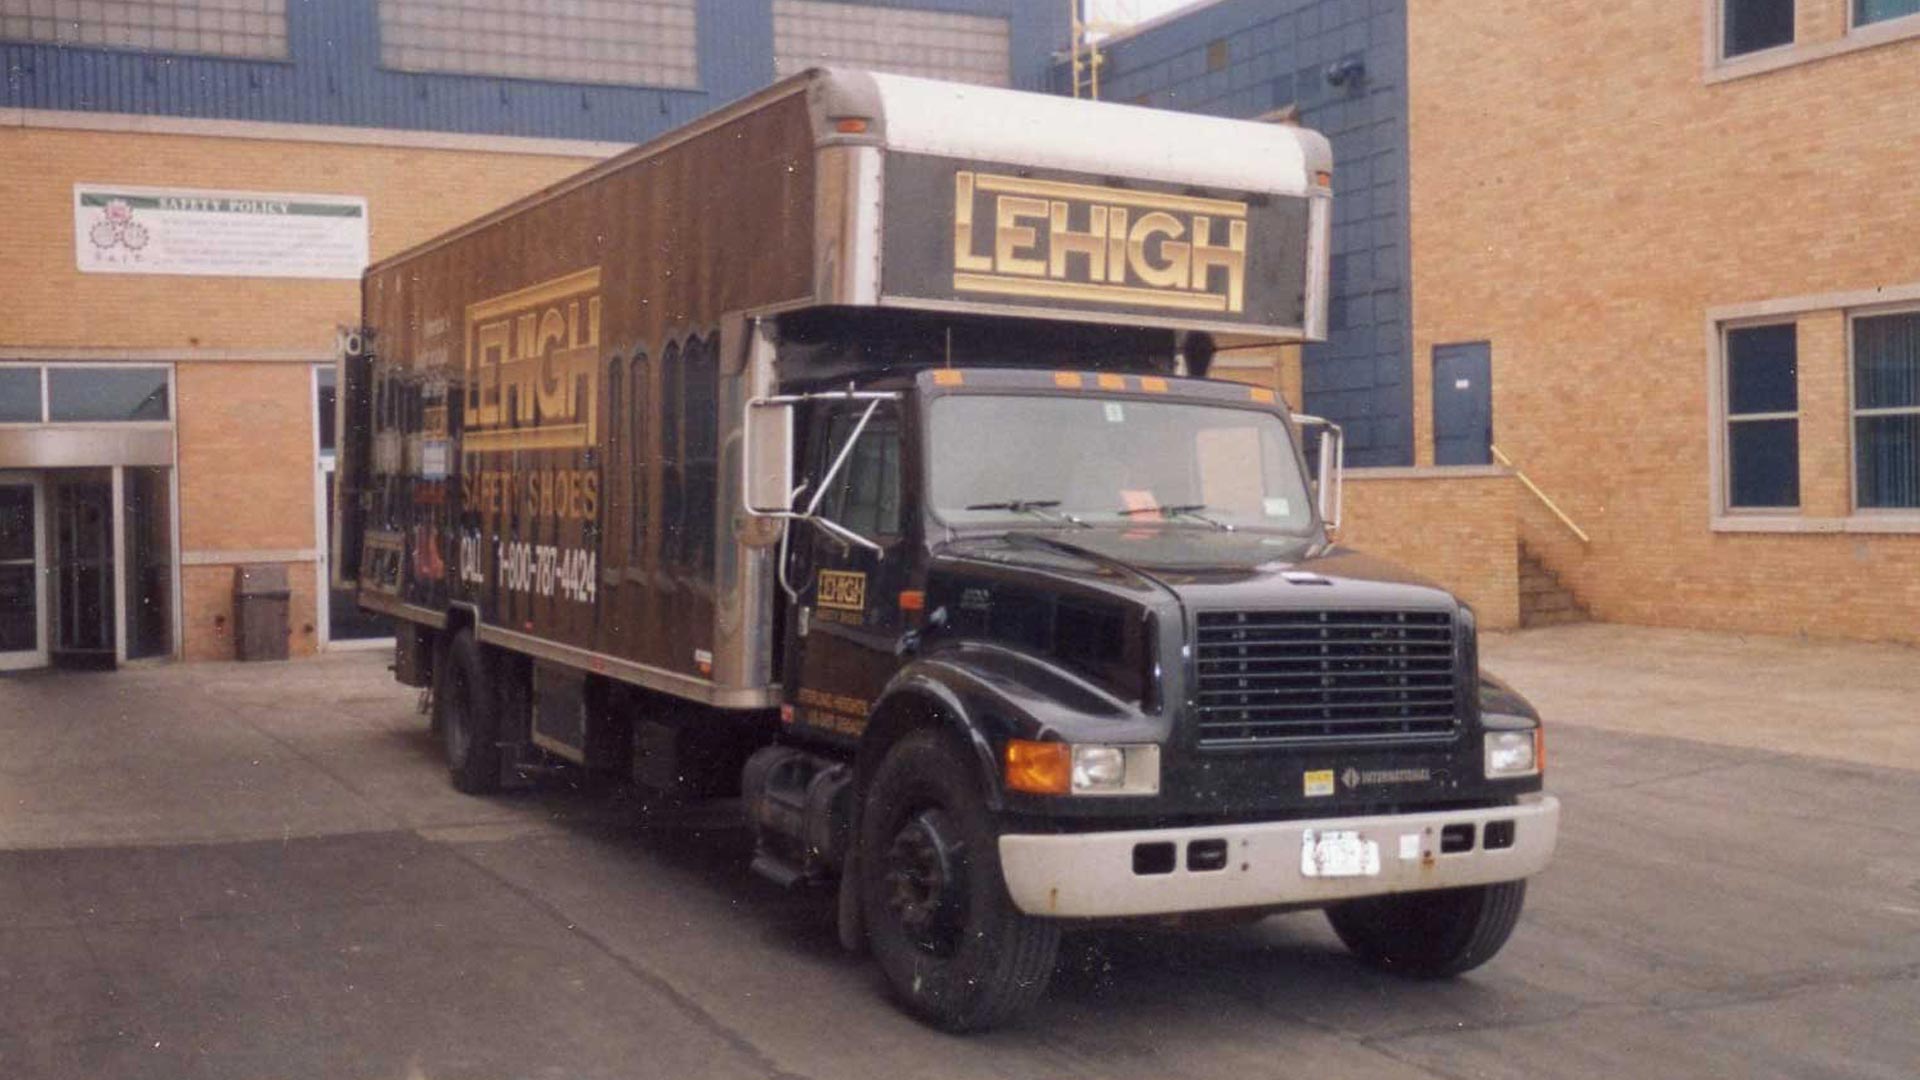 Lehigh Shoe Truck